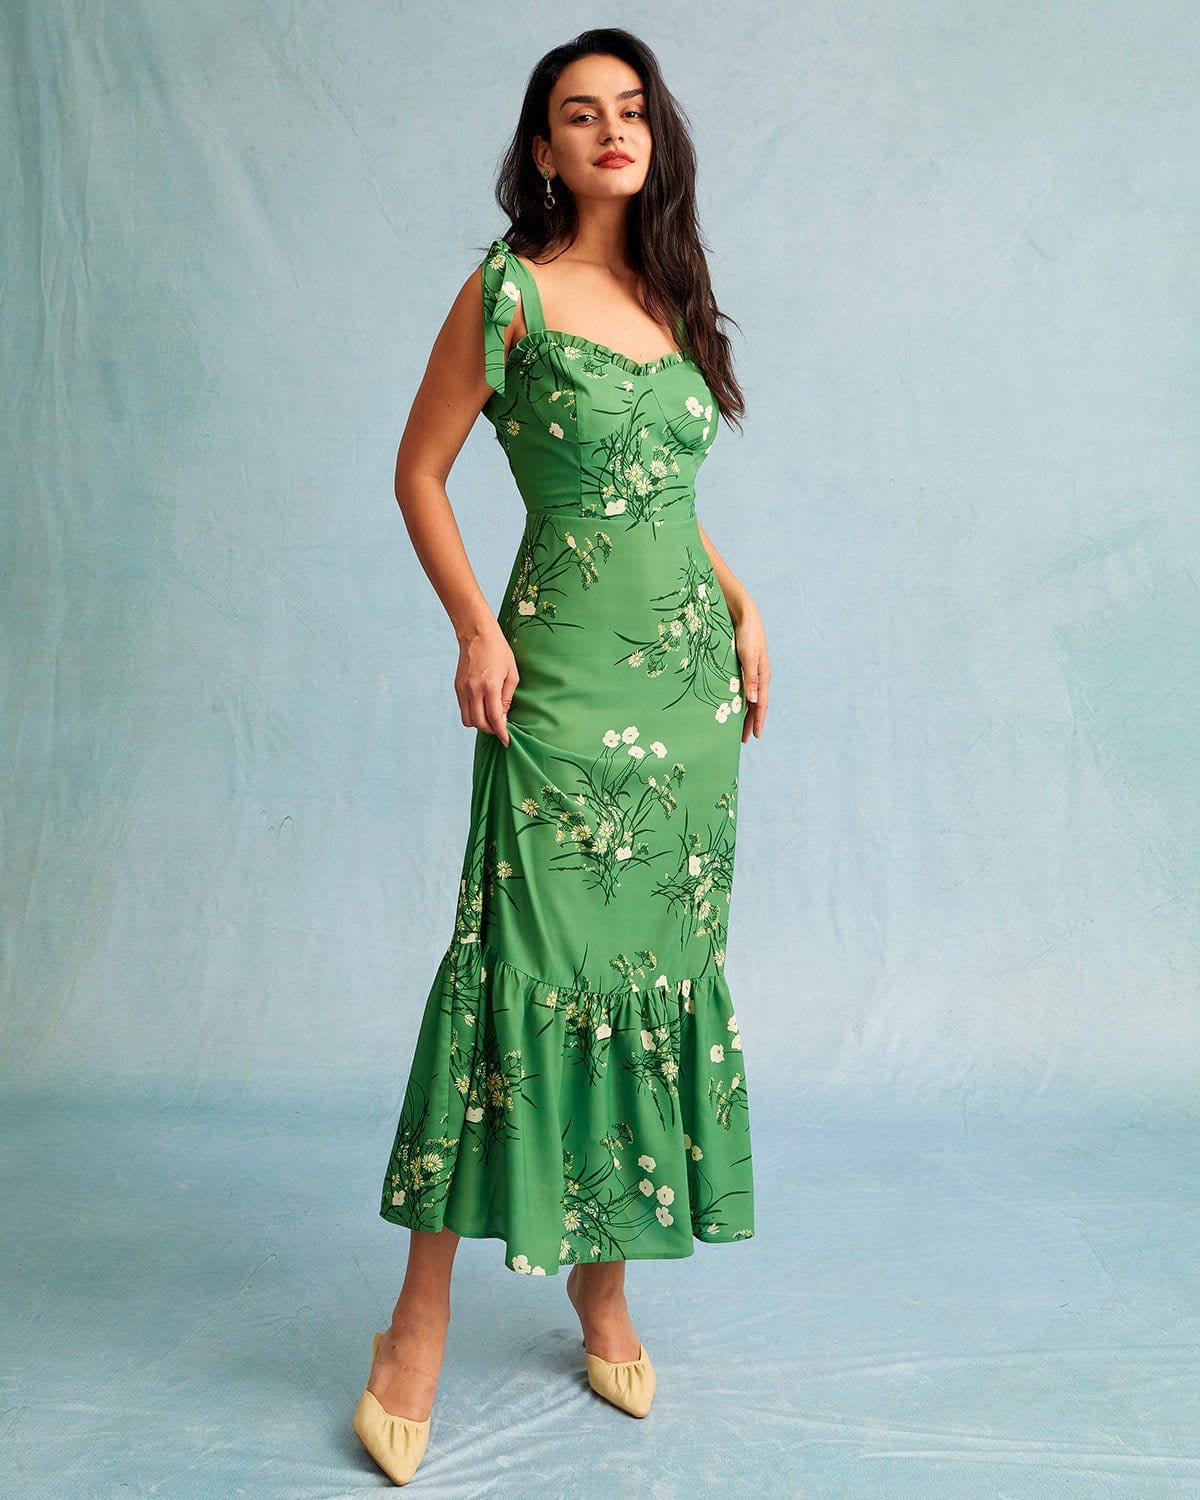 The Green Floral Tie Shoulder Ruffle Maxi Dress - Green Sleeveless